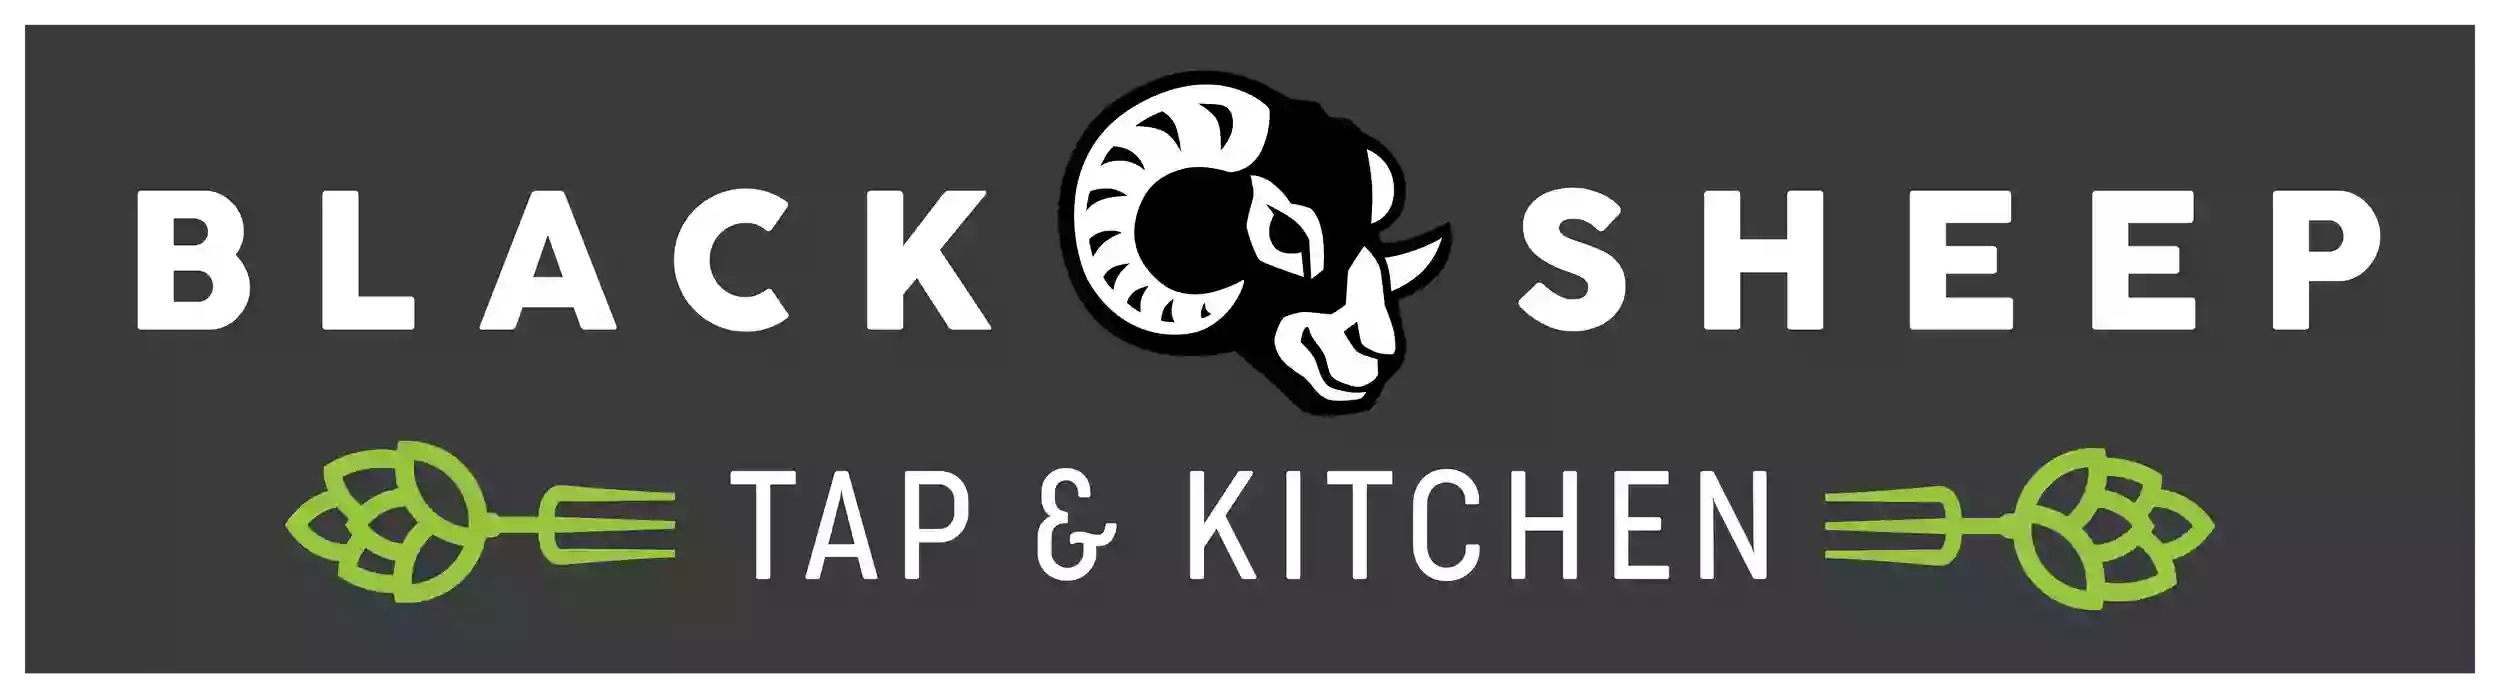 Black Sheep Tap & Kitchen